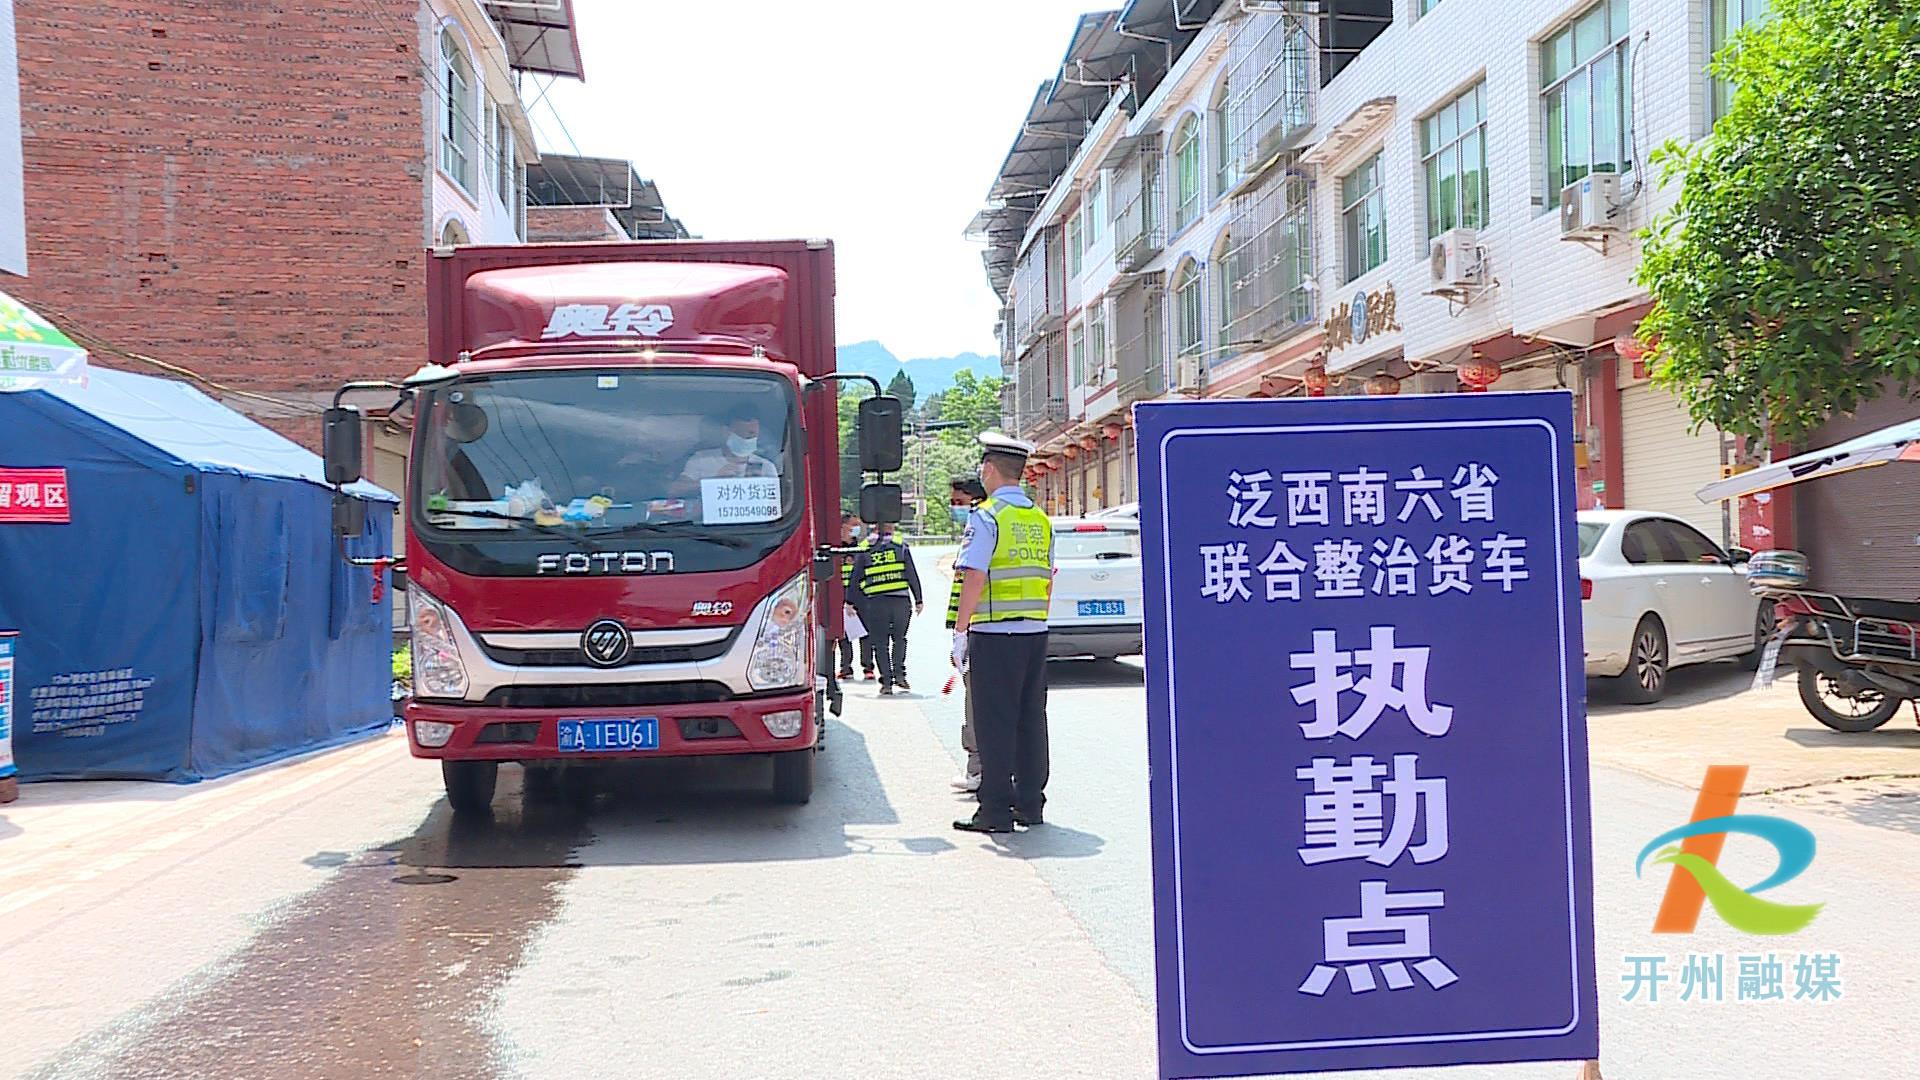 bat365在线官网登录入口|开江县与巫山镇将进行货车超载、超限整治活动(图2)